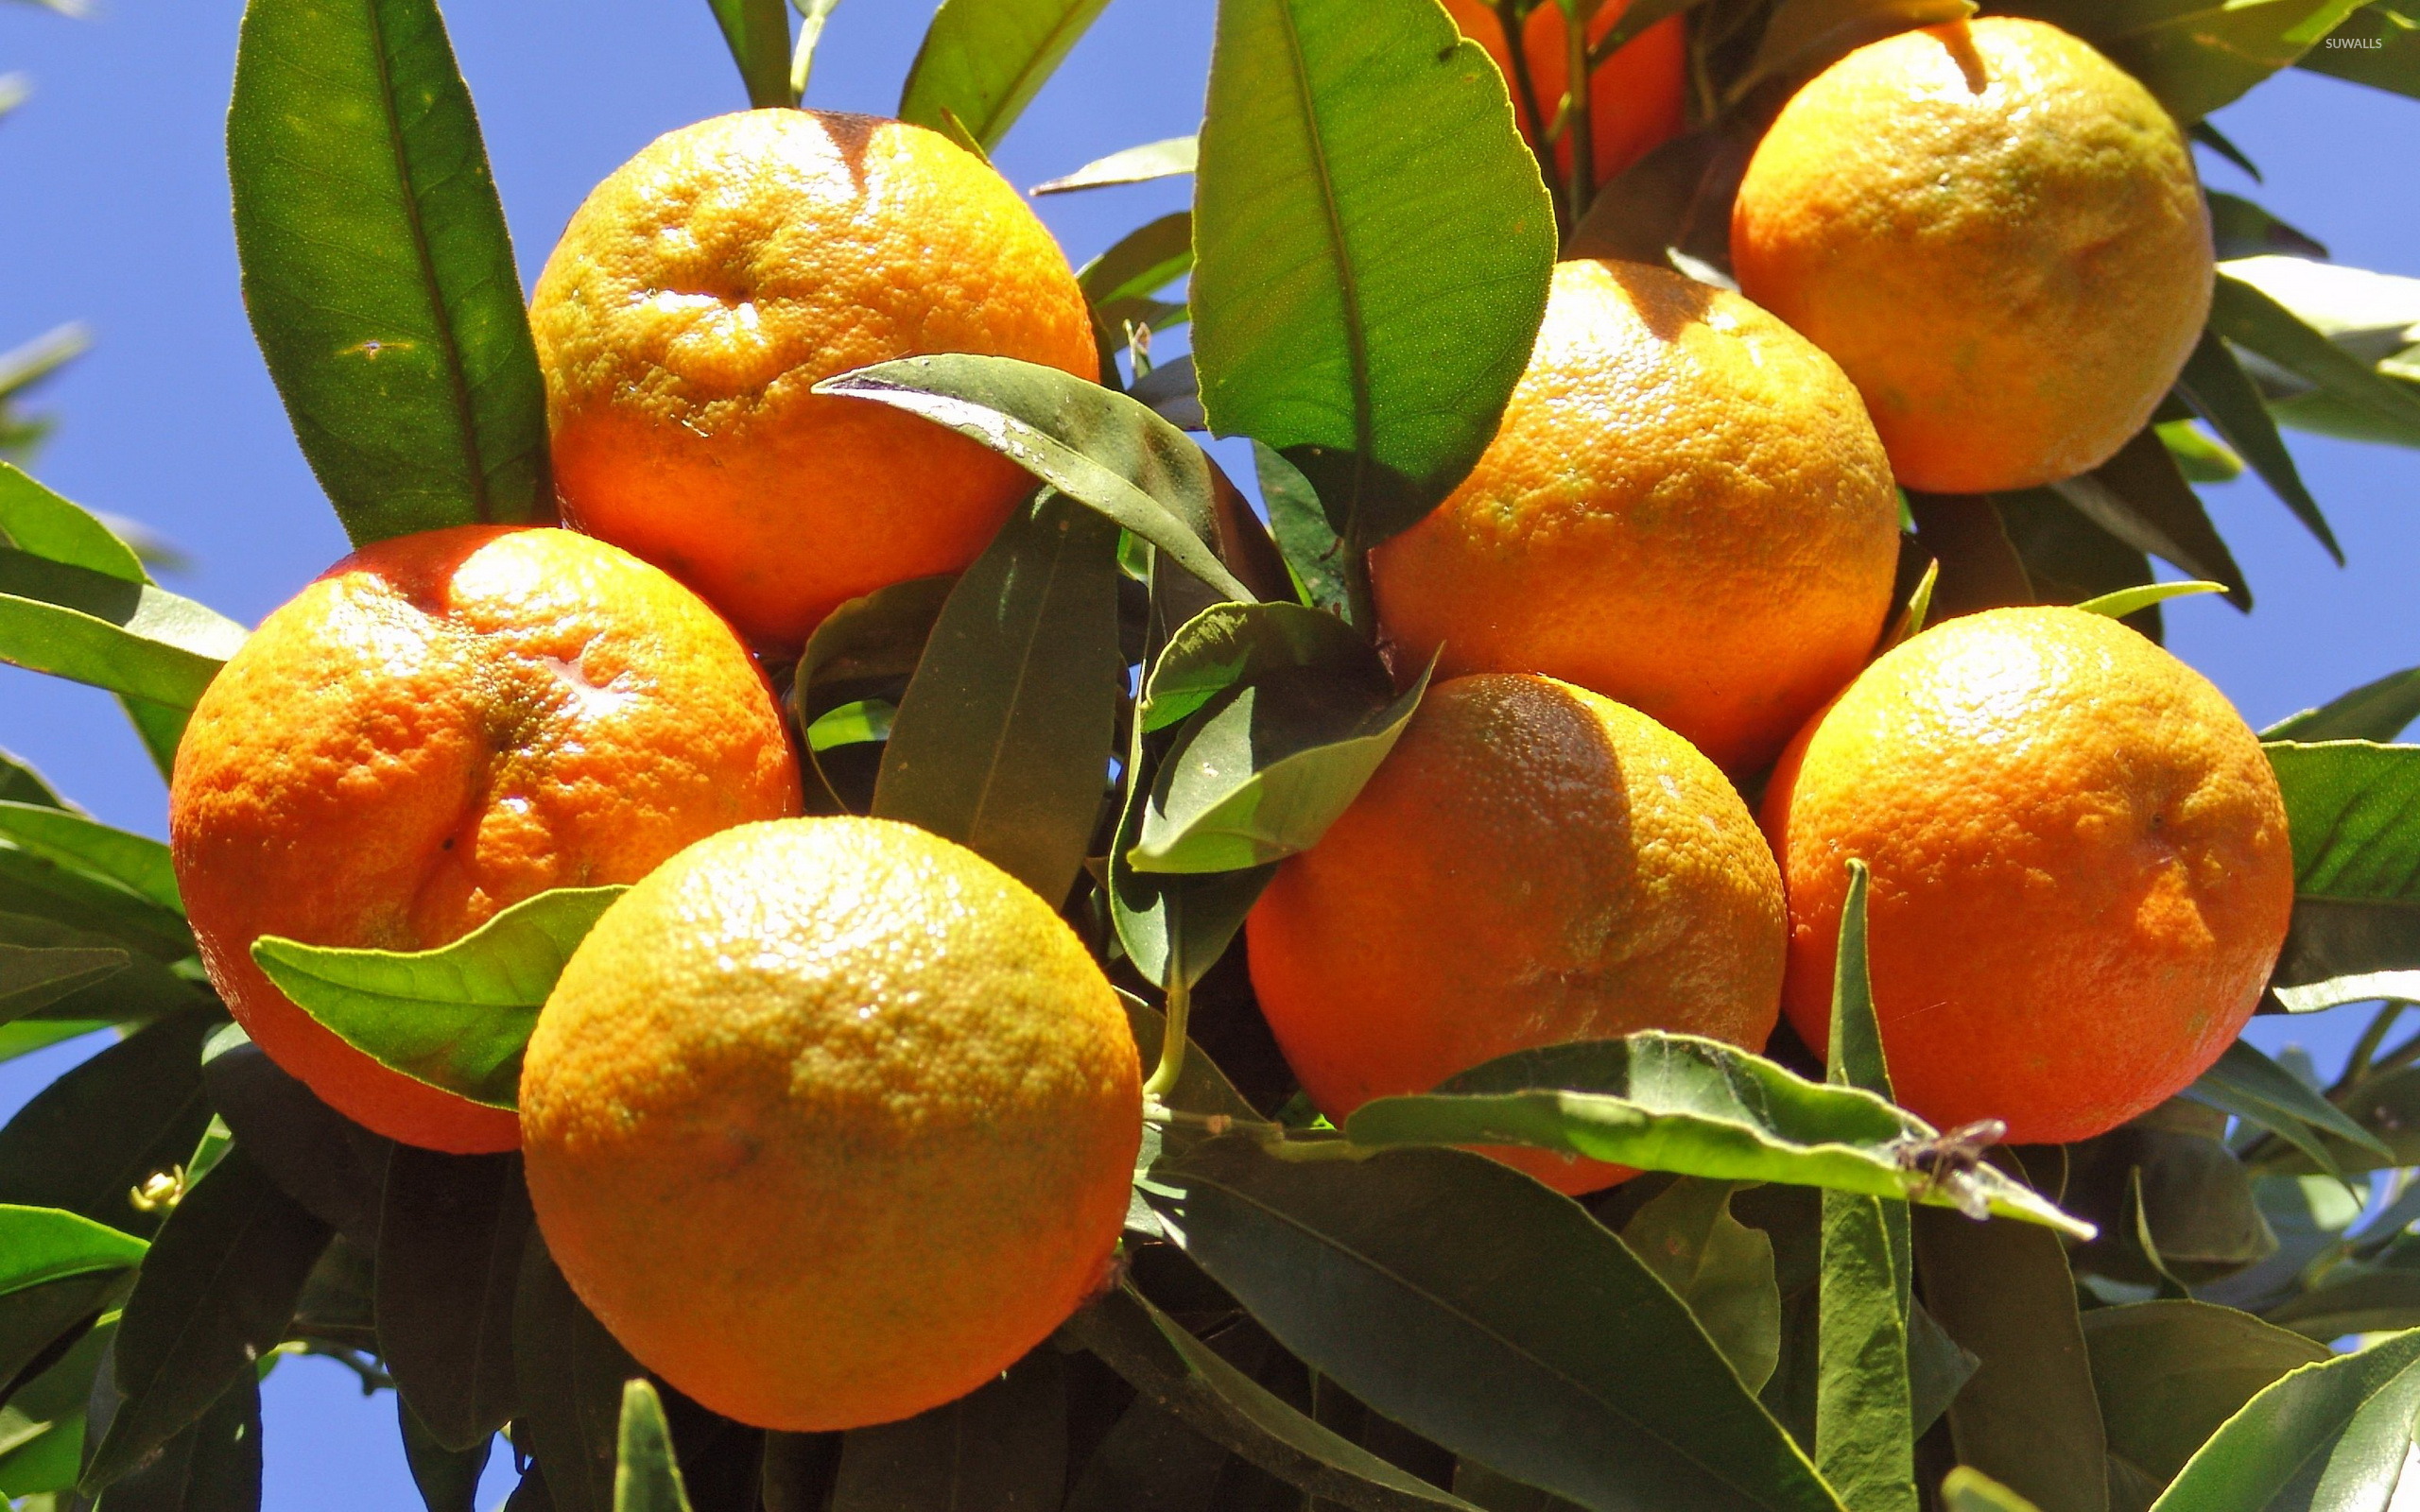 شجر البرتقال Oranges-in-the-tree-39694-2560x1600